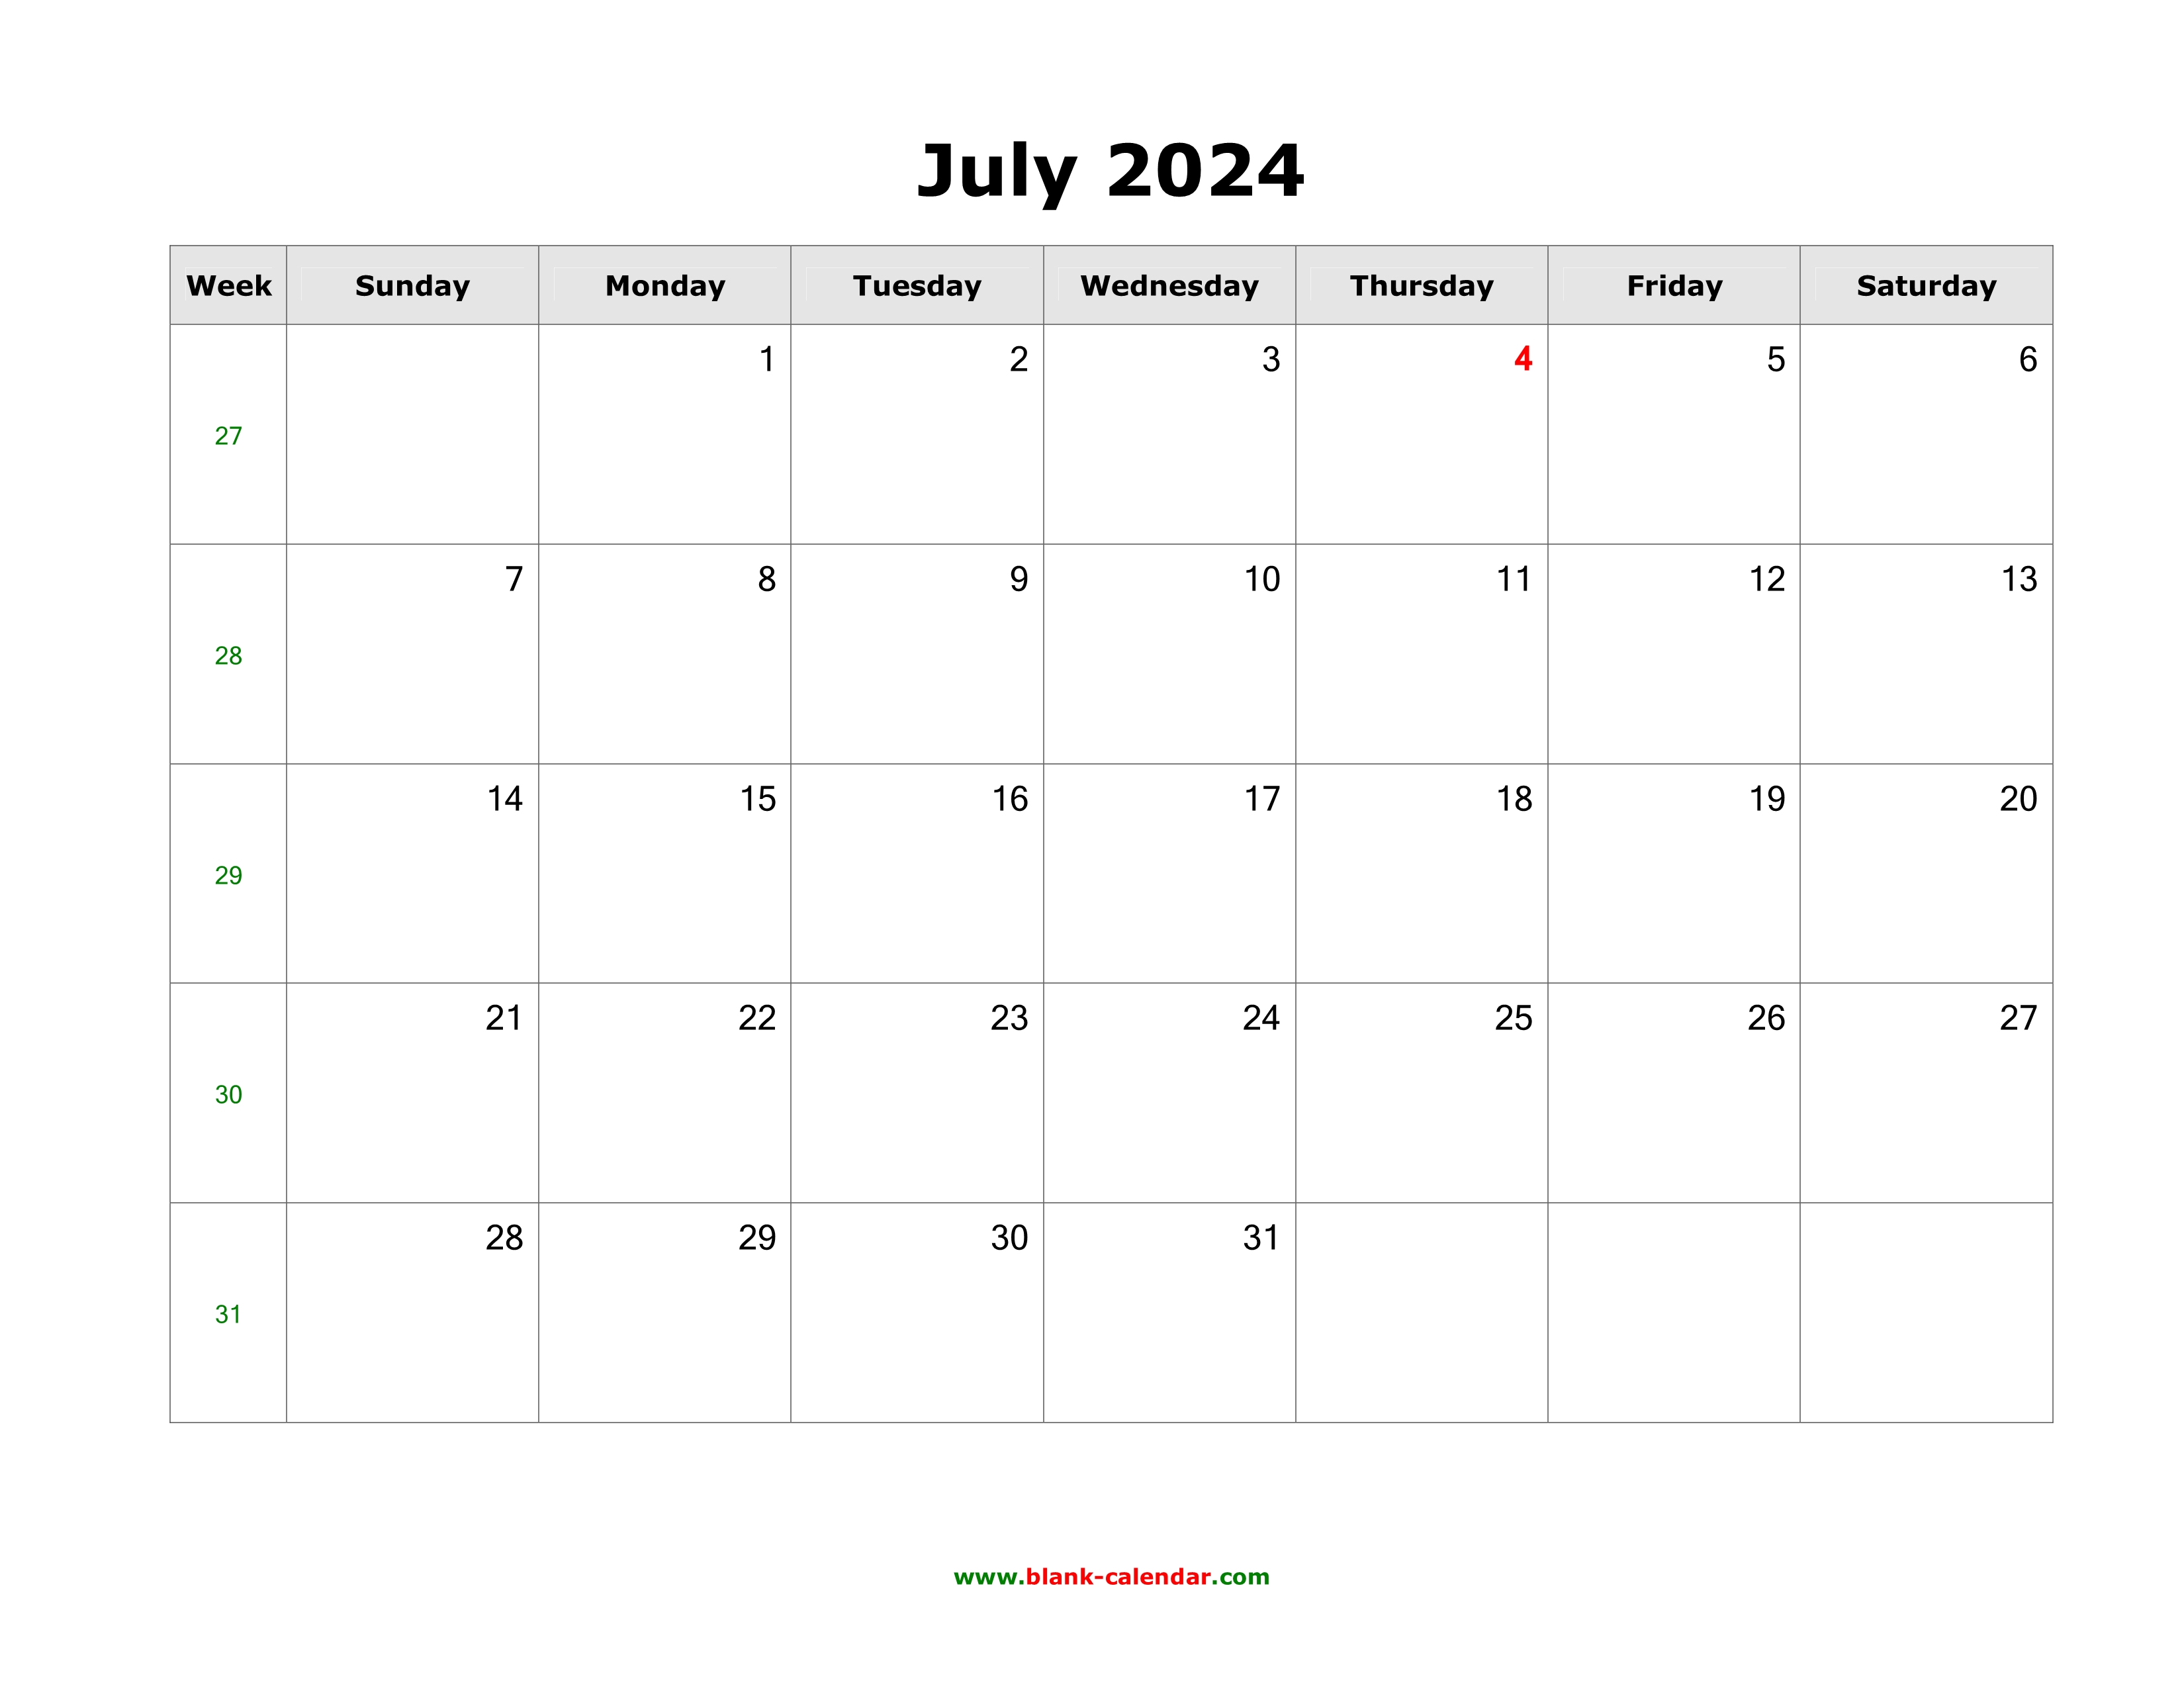 Download July 2024 Blank Calendar (horizontal)